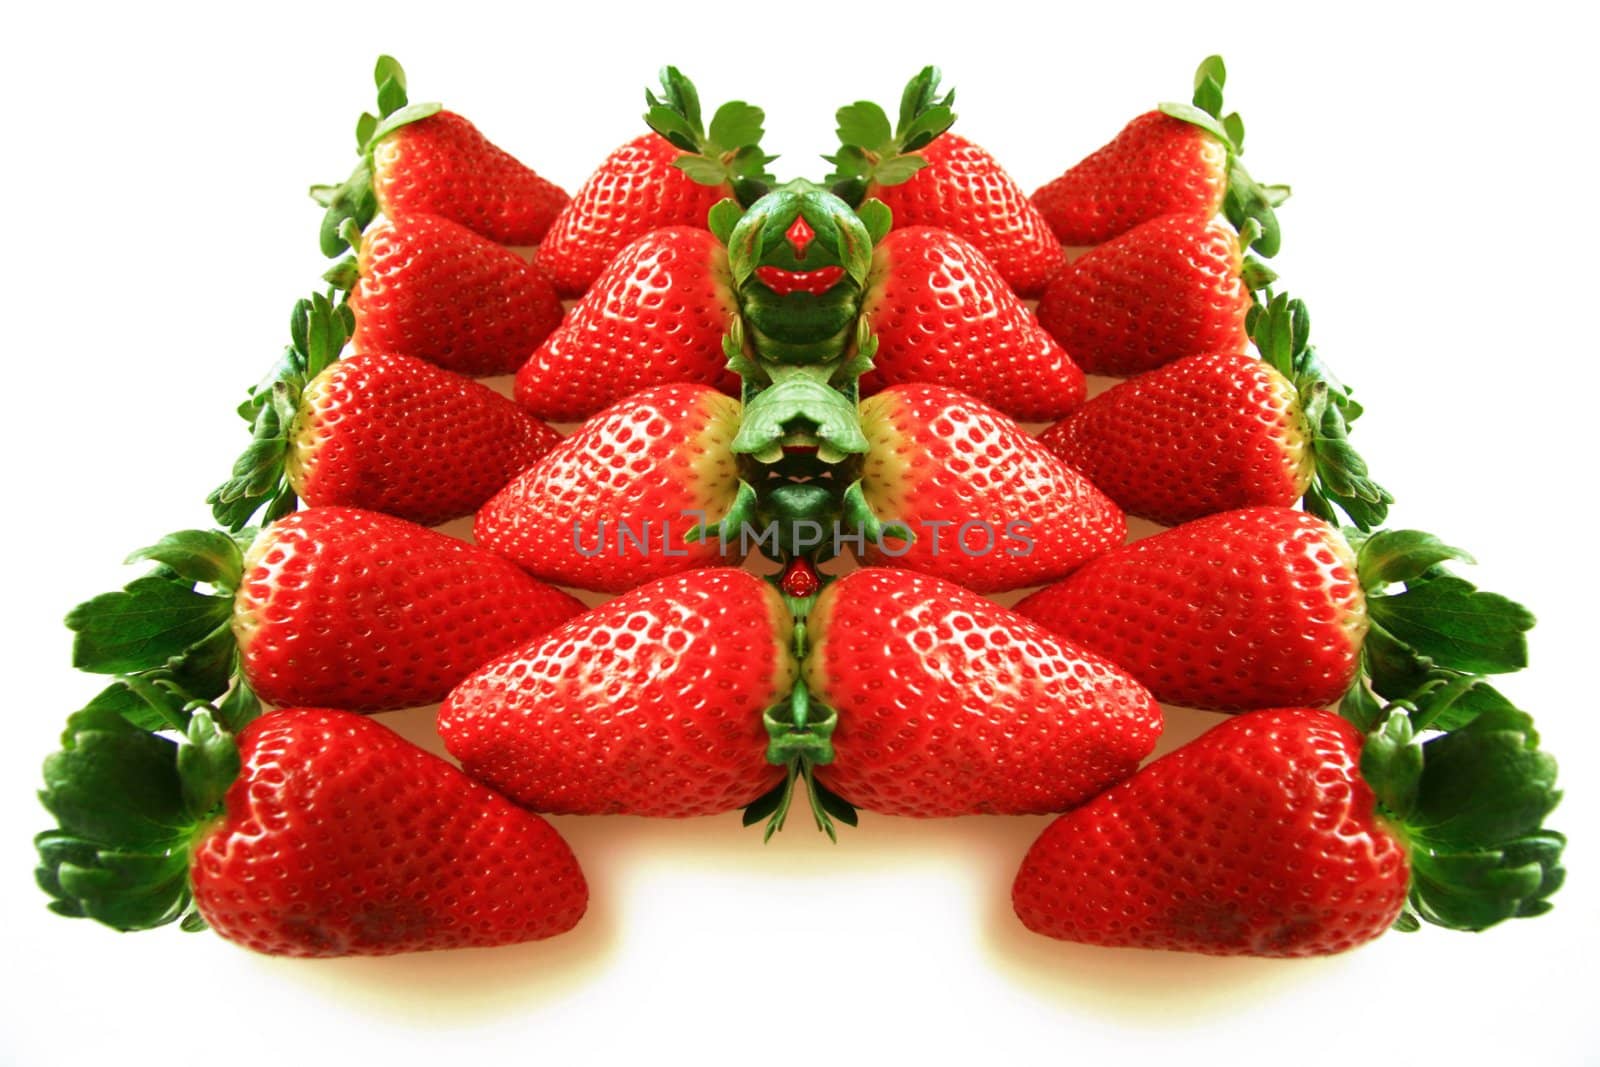 strawberry on white backgraund